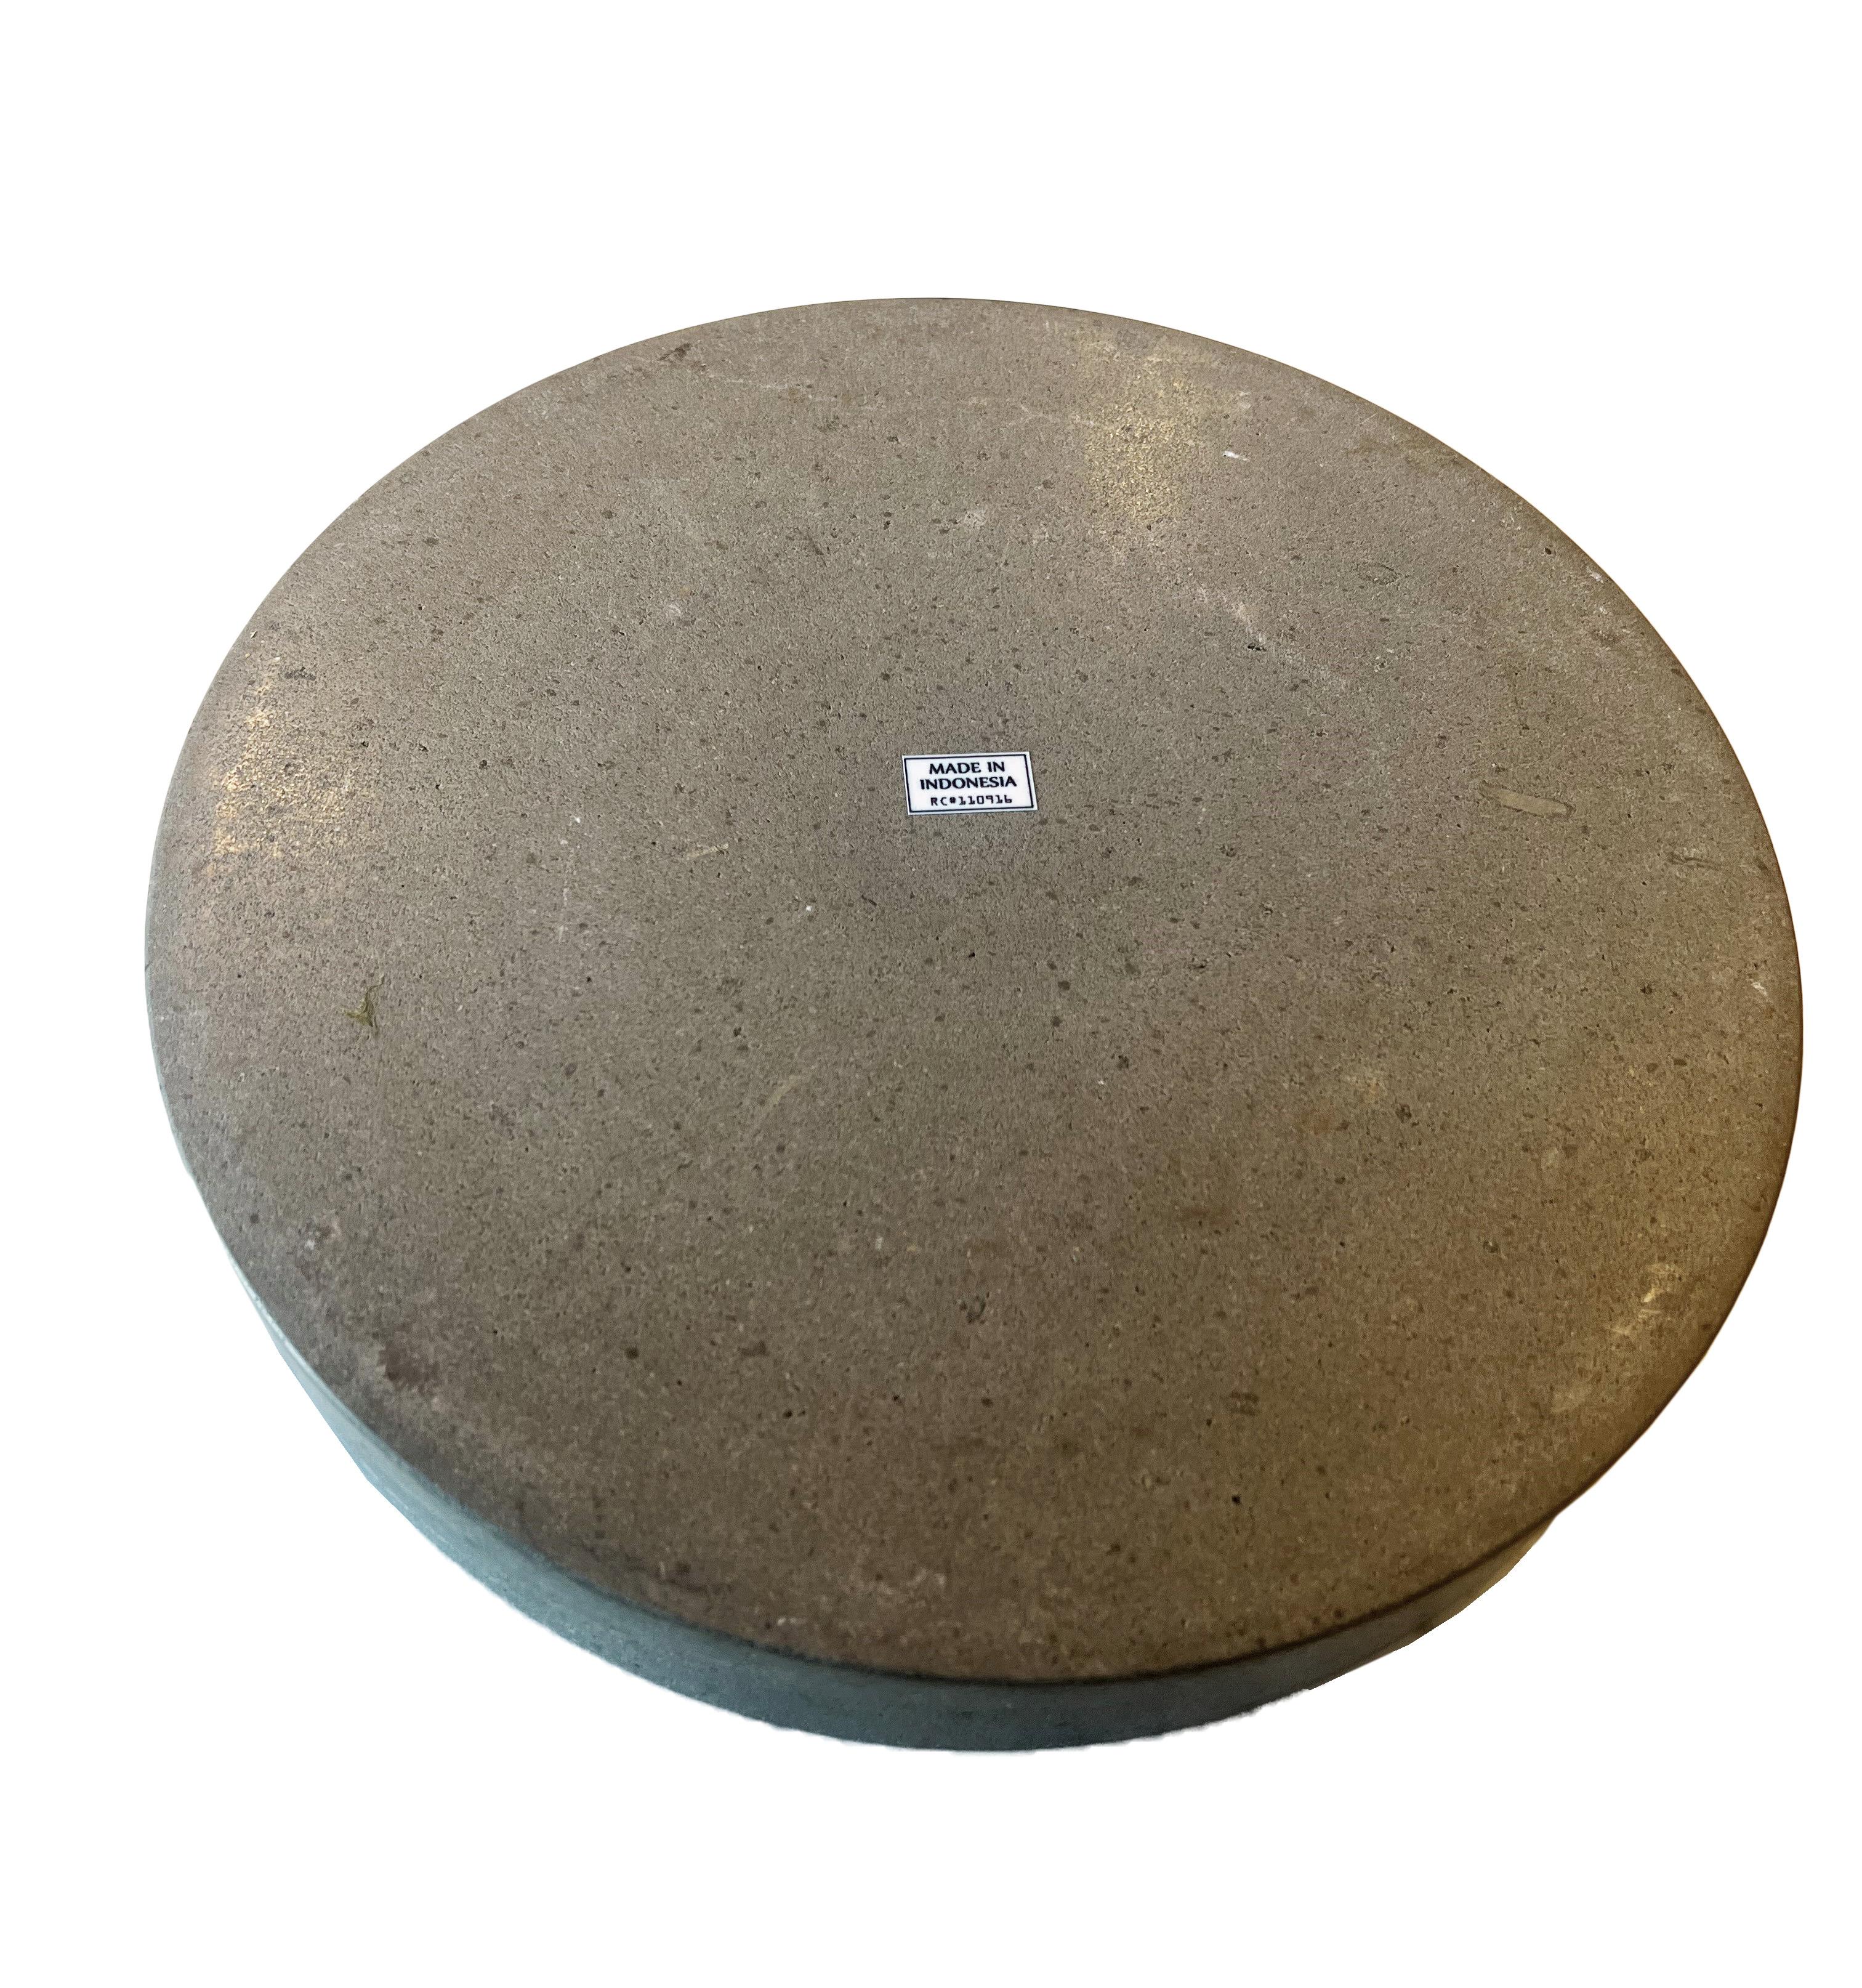 Artesian Concrete Bowl In Excellent Condition For Sale In Scottsdale, AZ